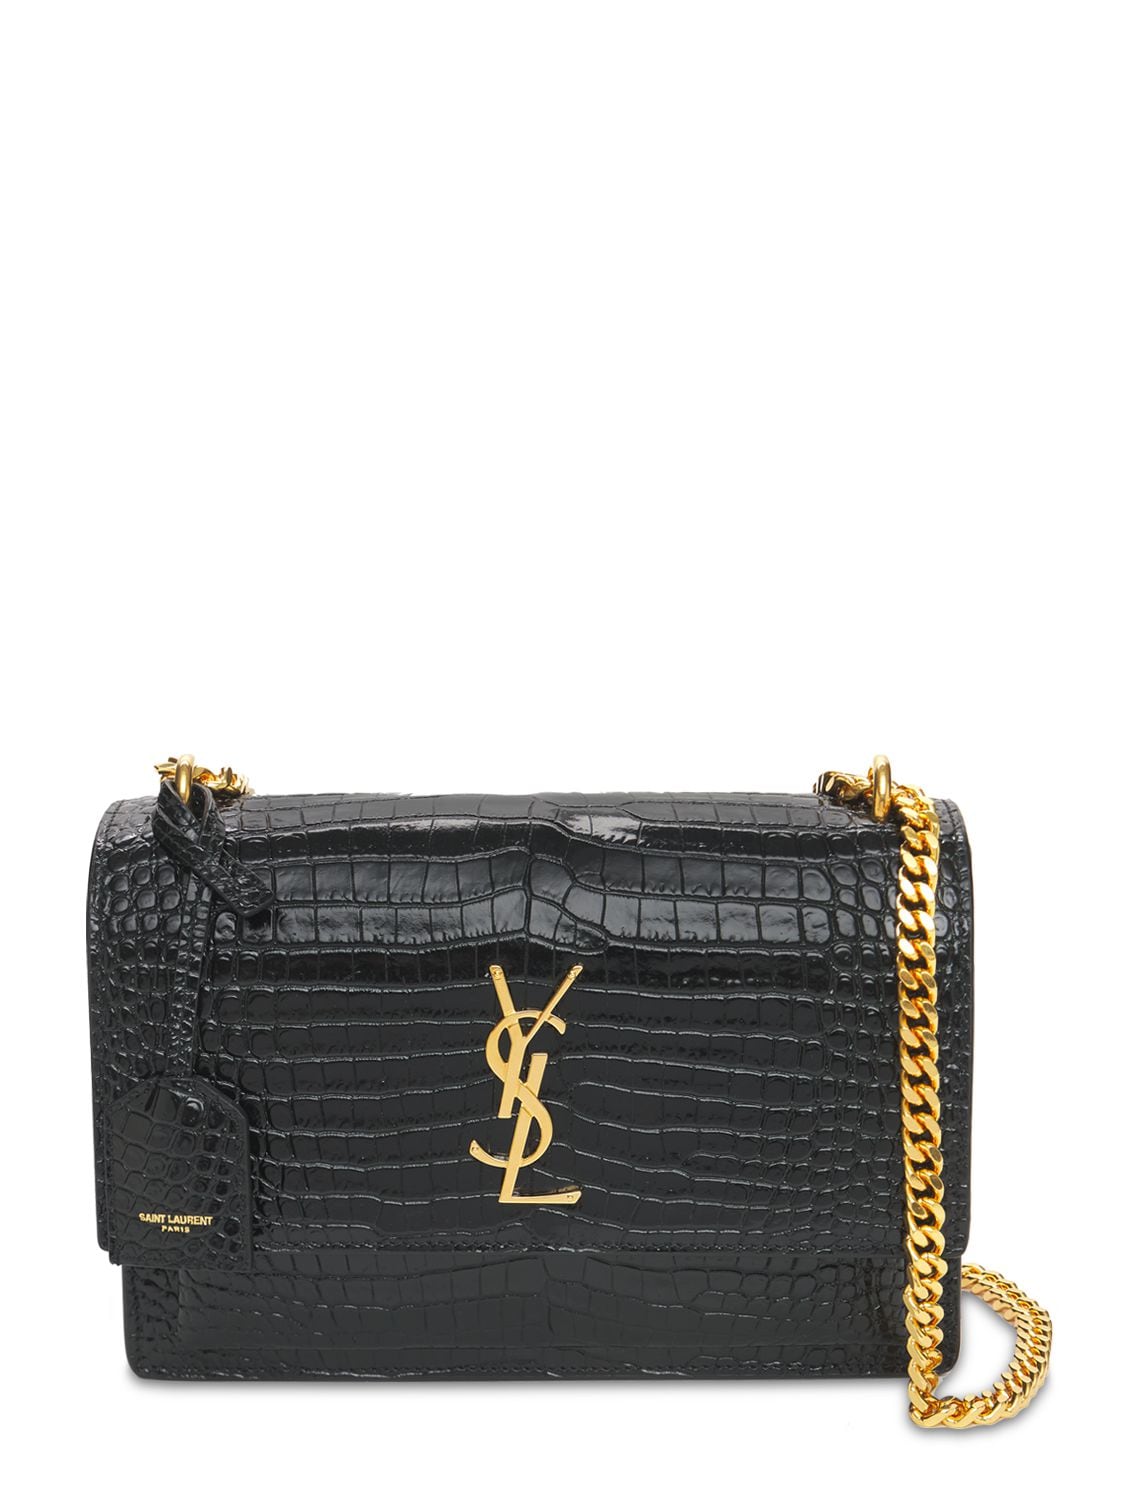 Saint Laurent Medium Sunset Bag, Black Croc Embossed, Gold Hardware